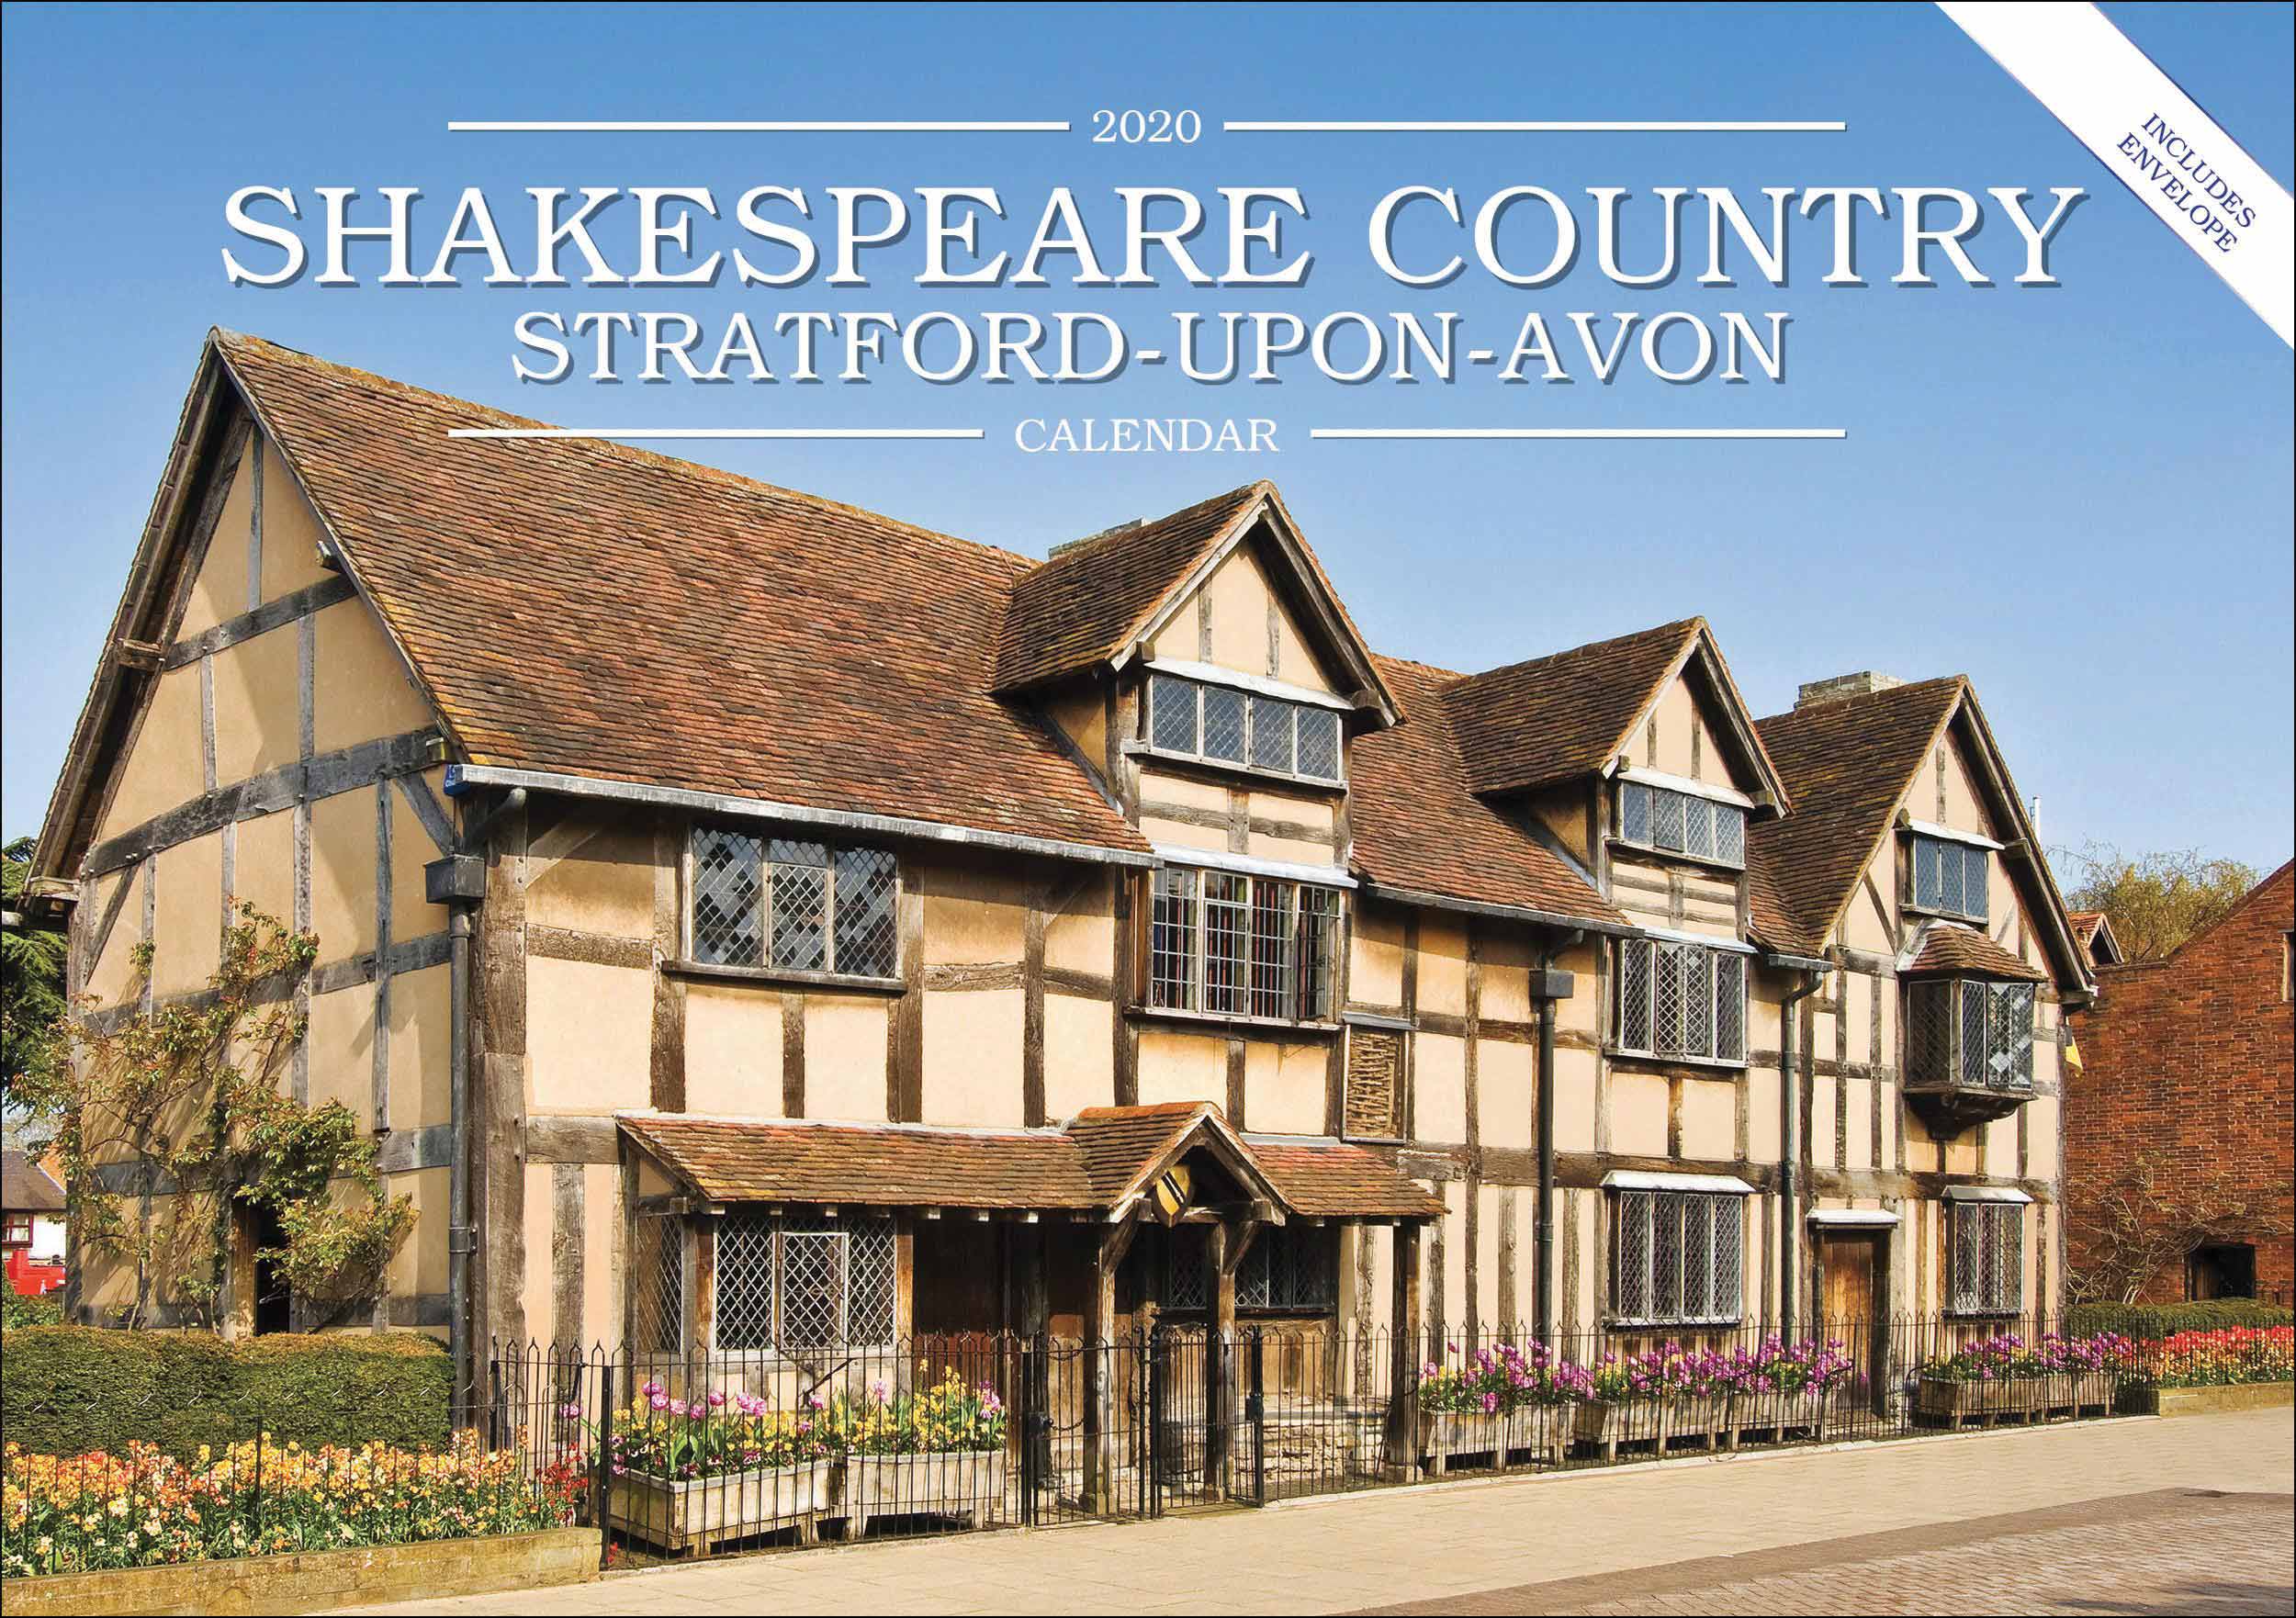 Stratford upon avon shakespeare